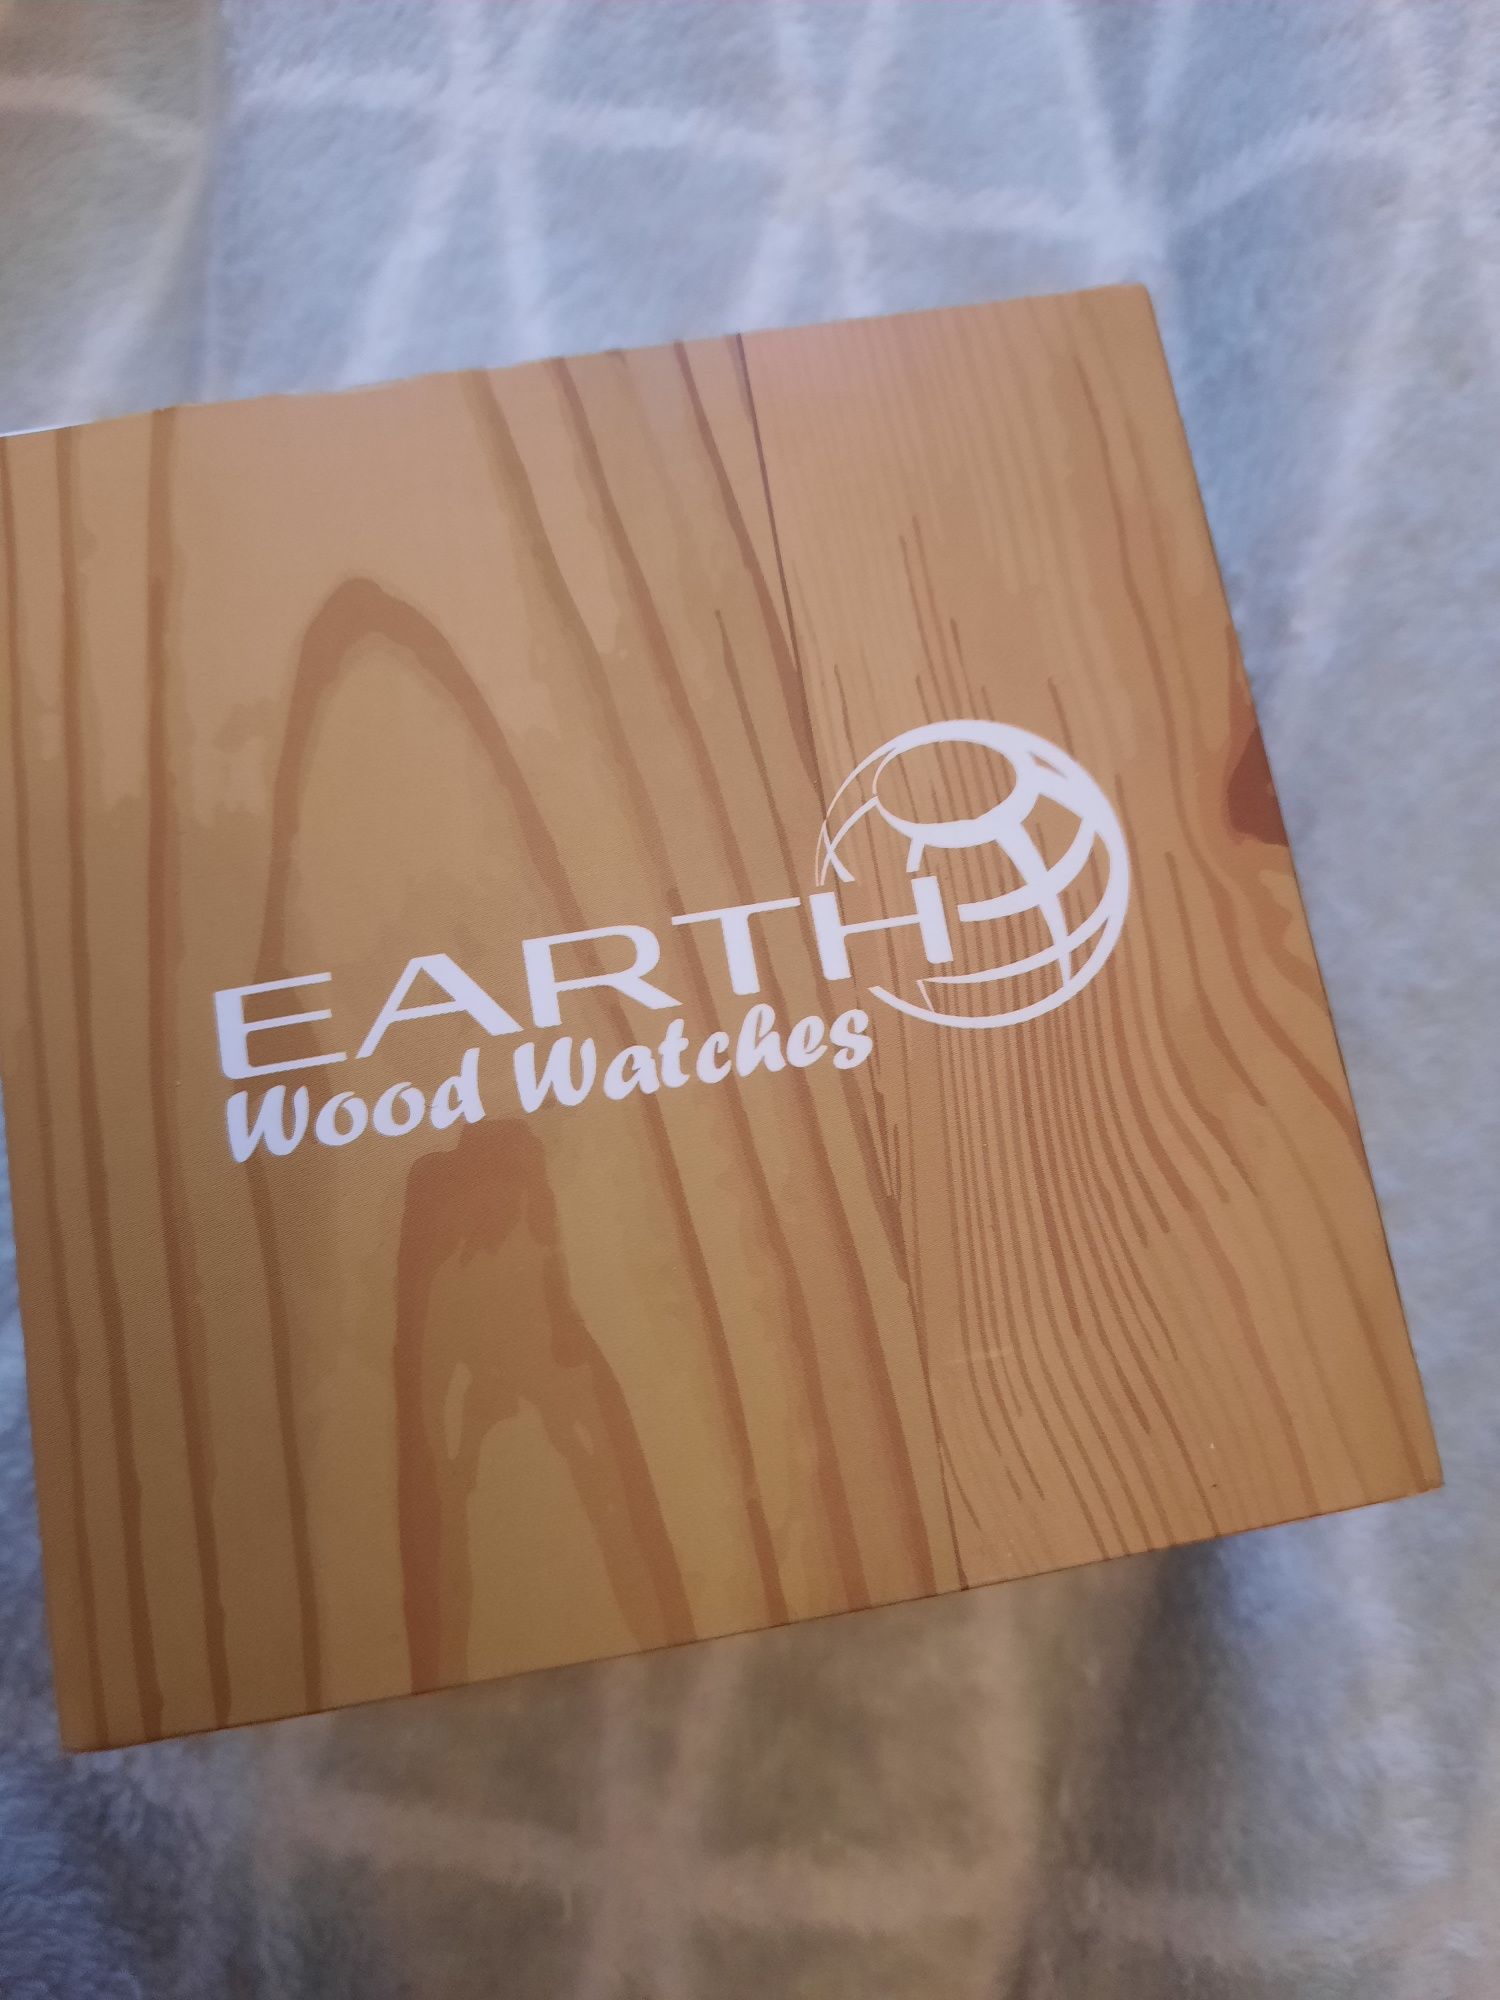 Zegarek drewniany EARTH Wood